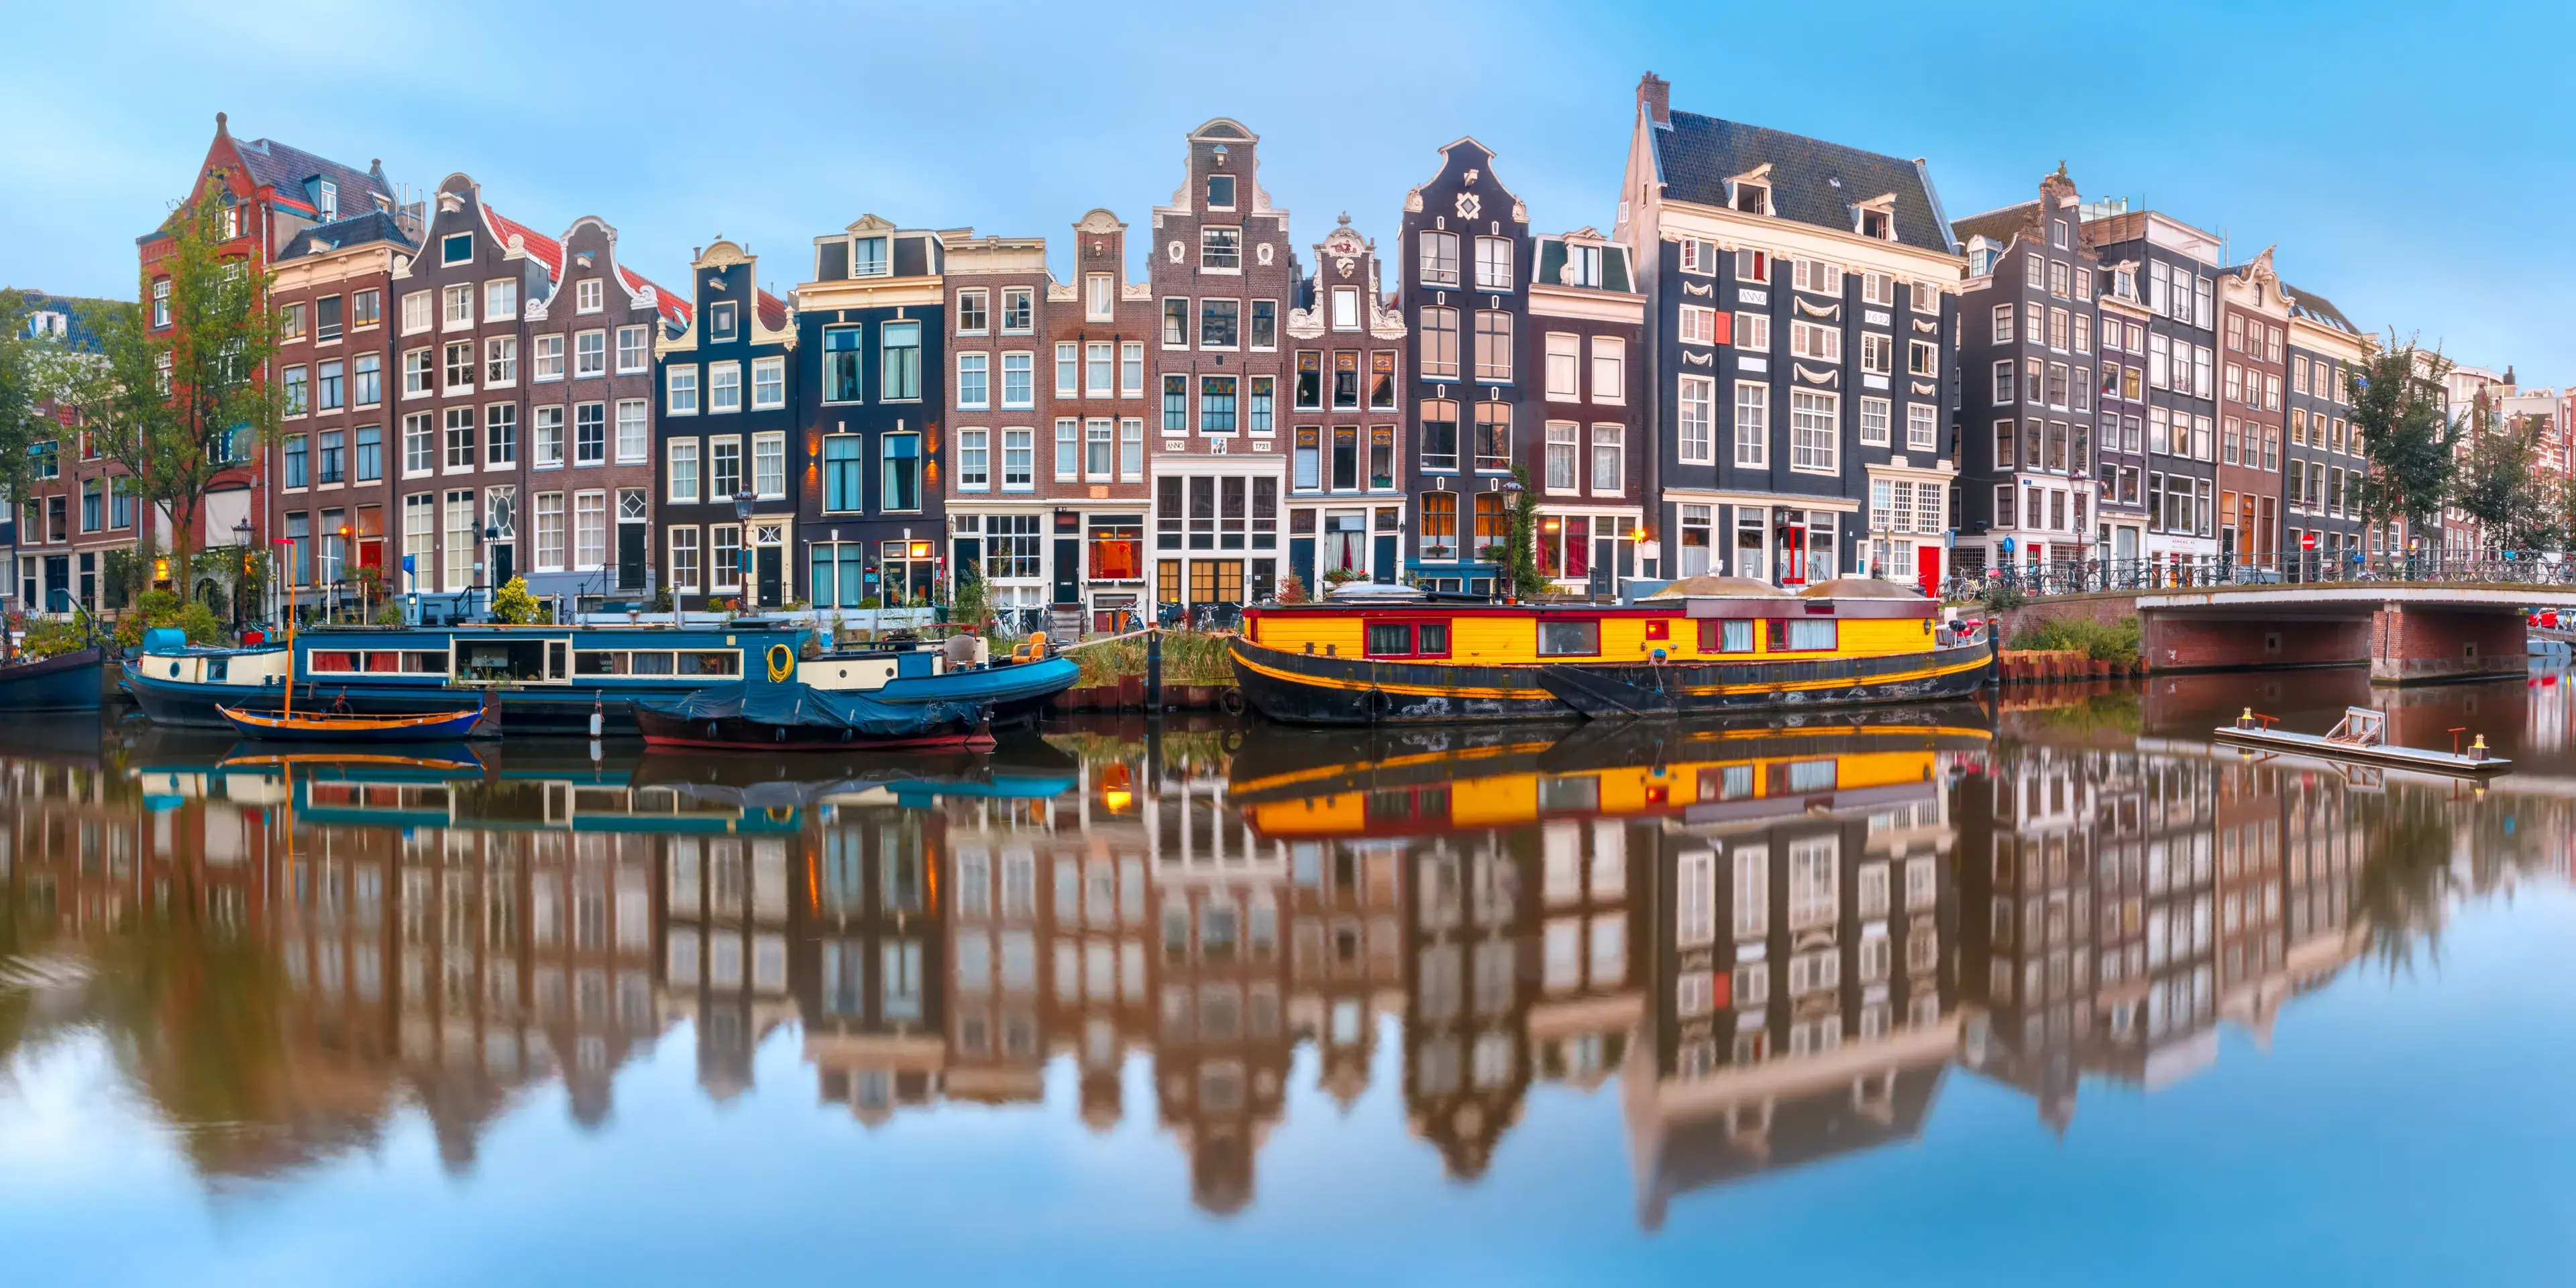 Best Amsterdam hotels. Cheap hotels in Amsterdam, Netherlands